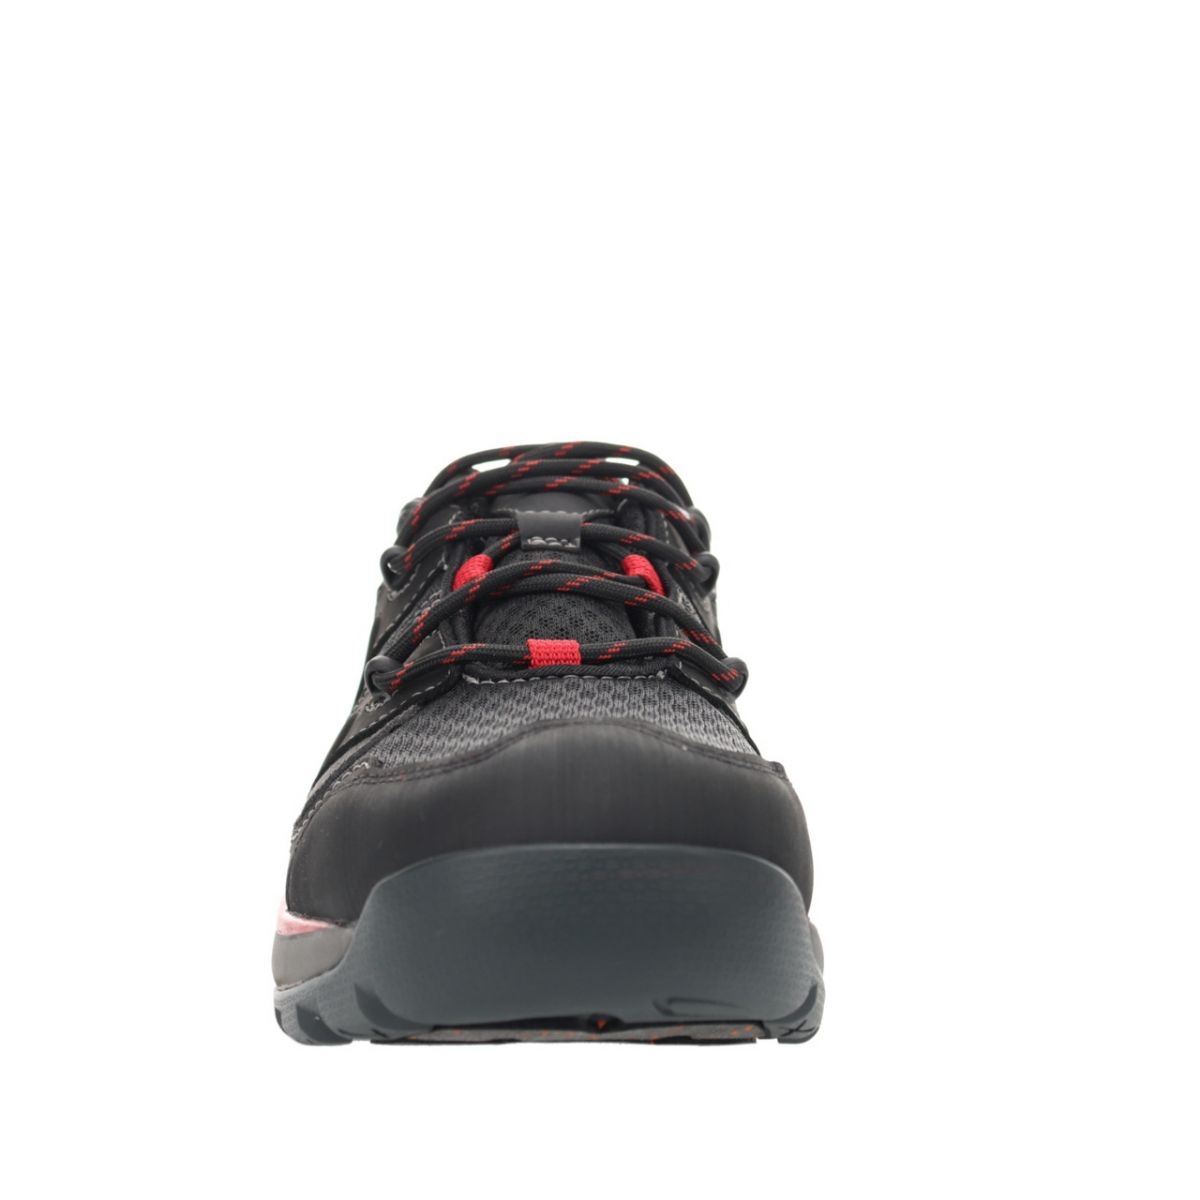 Propet Men's Vercors Hiking Shoe Black/Red - MOA002SBRD BLACK/RED - BLACK/RED, 11 X-Wide